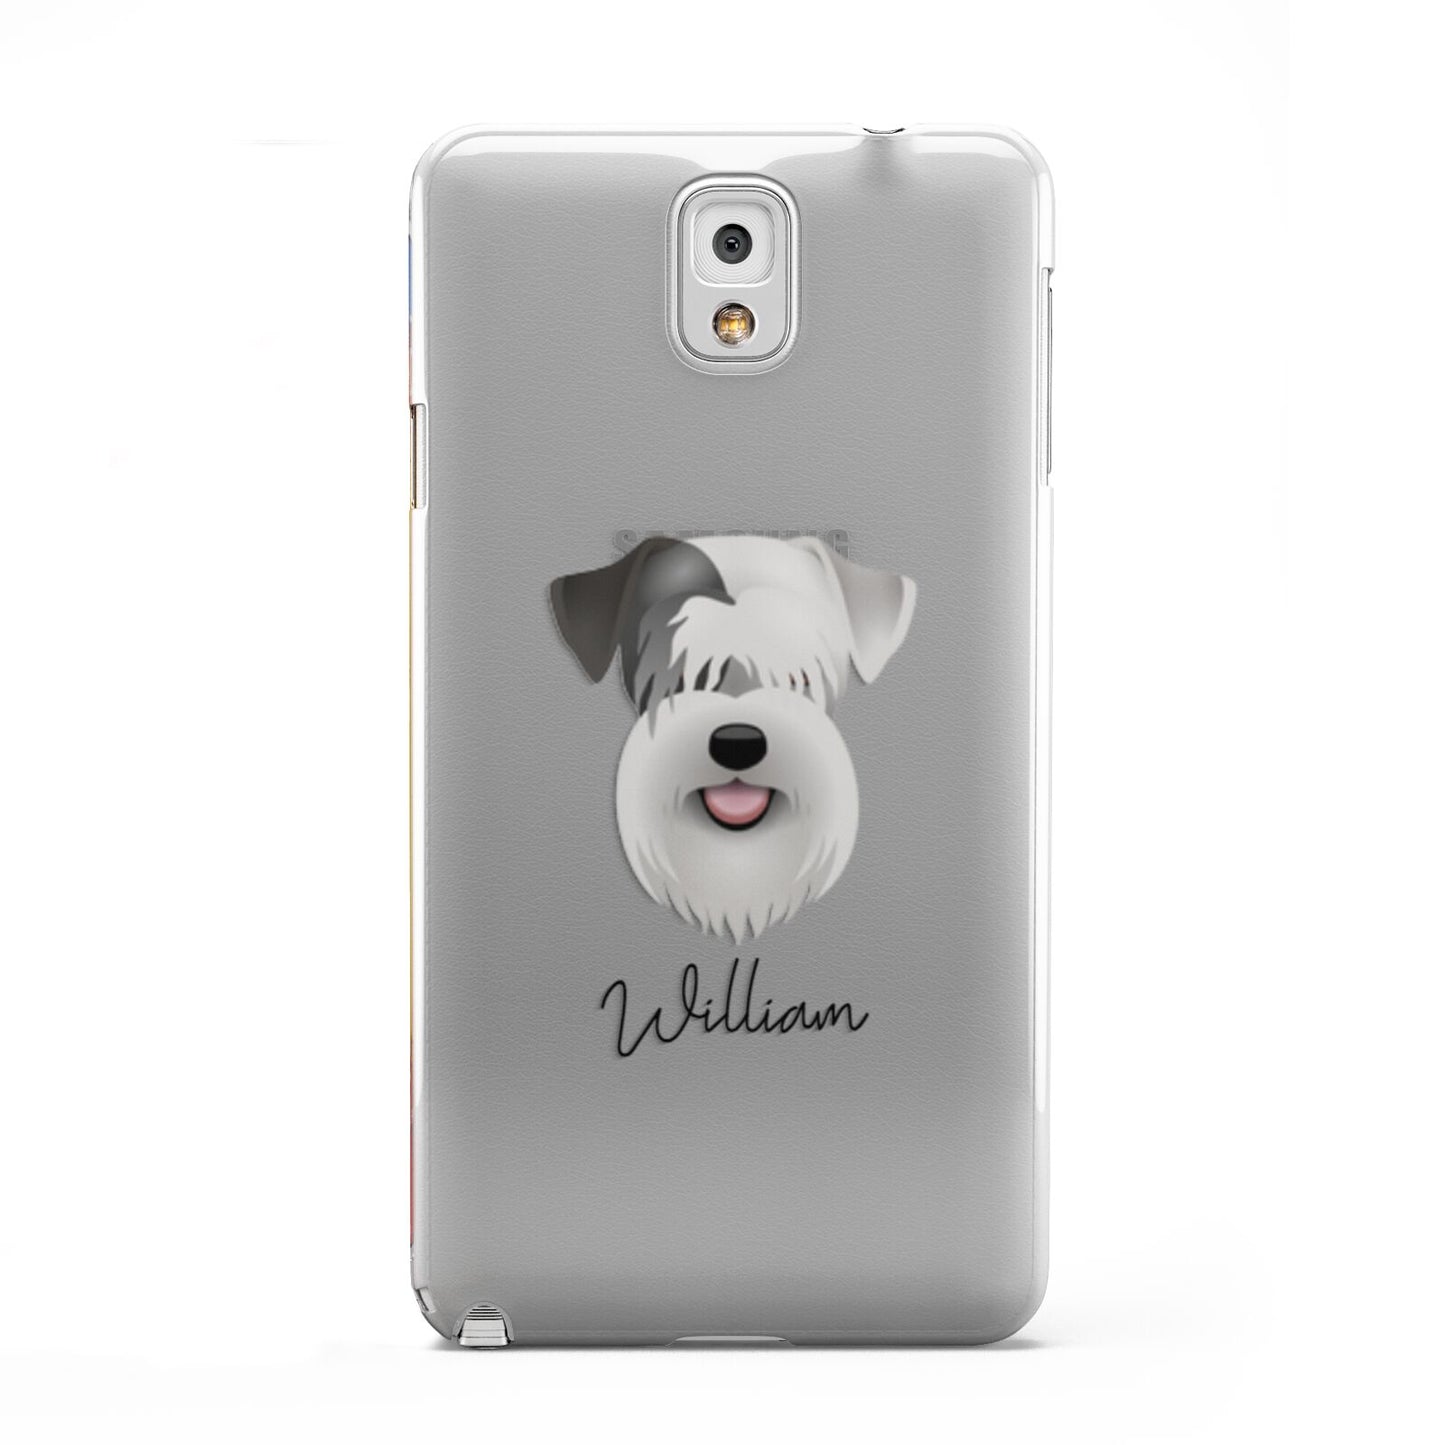 Sealyham Terrier Personalised Samsung Galaxy Note 3 Case